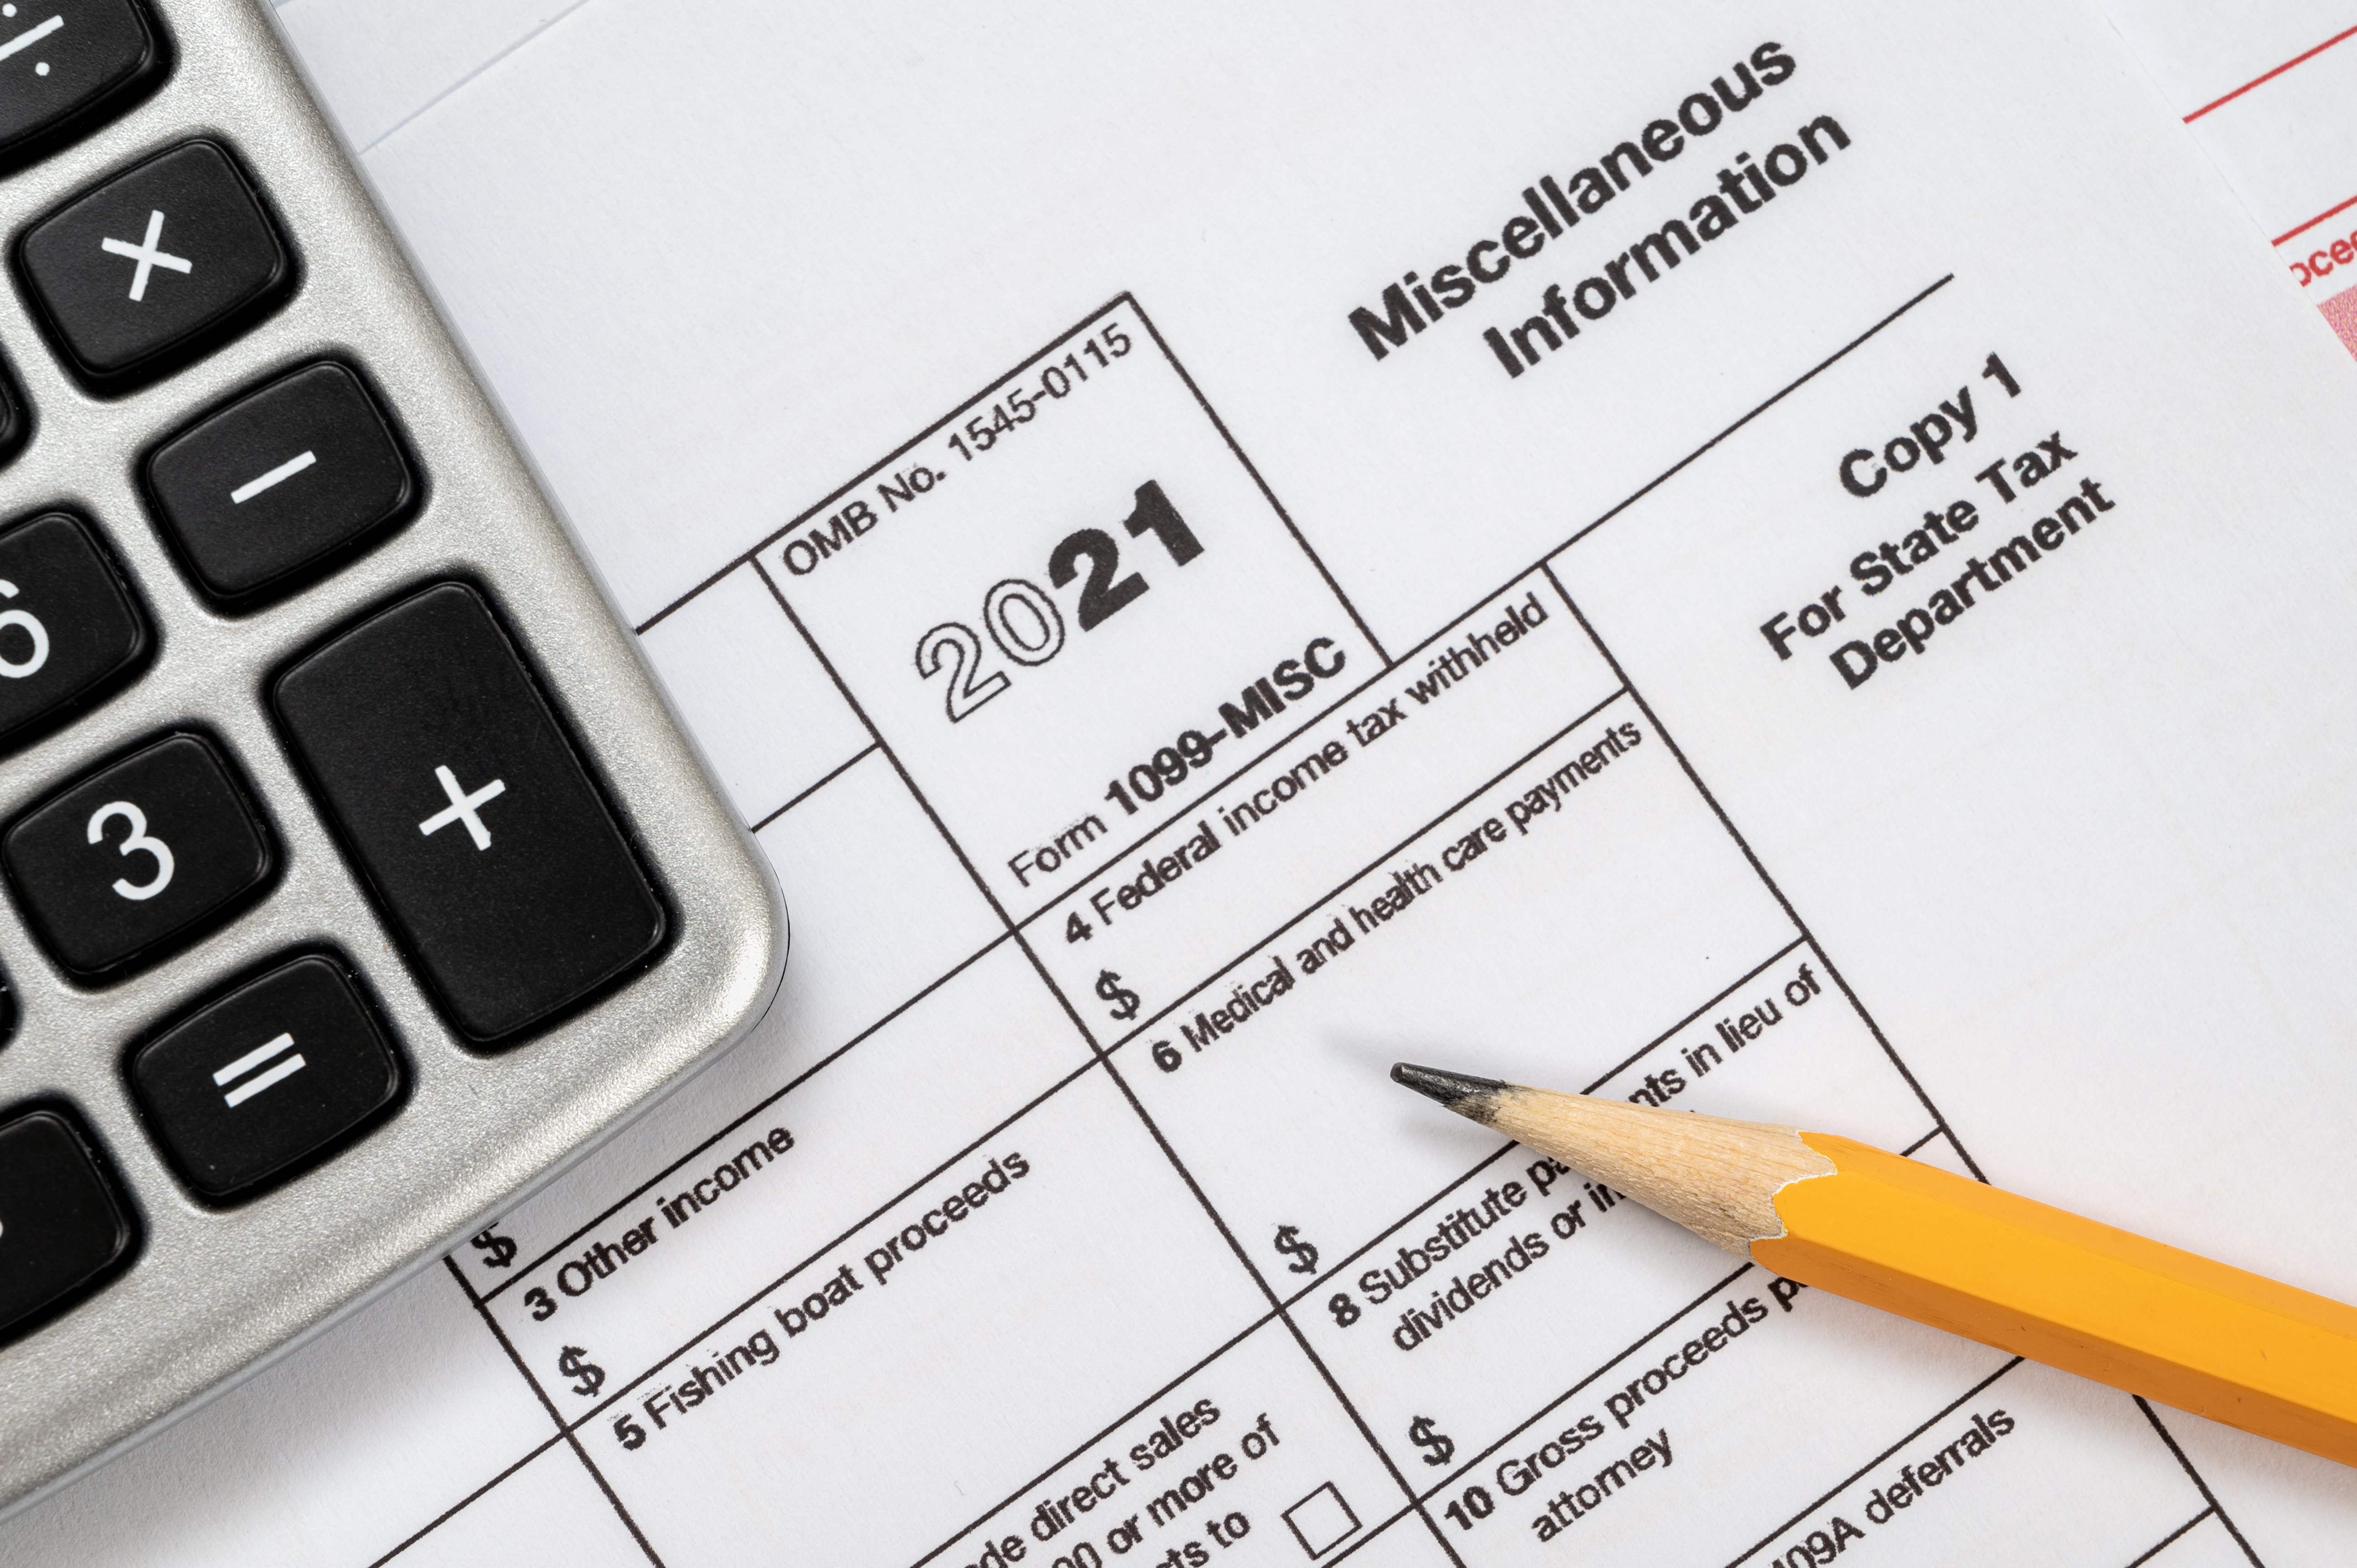 1099-misc 2021 Tax Form